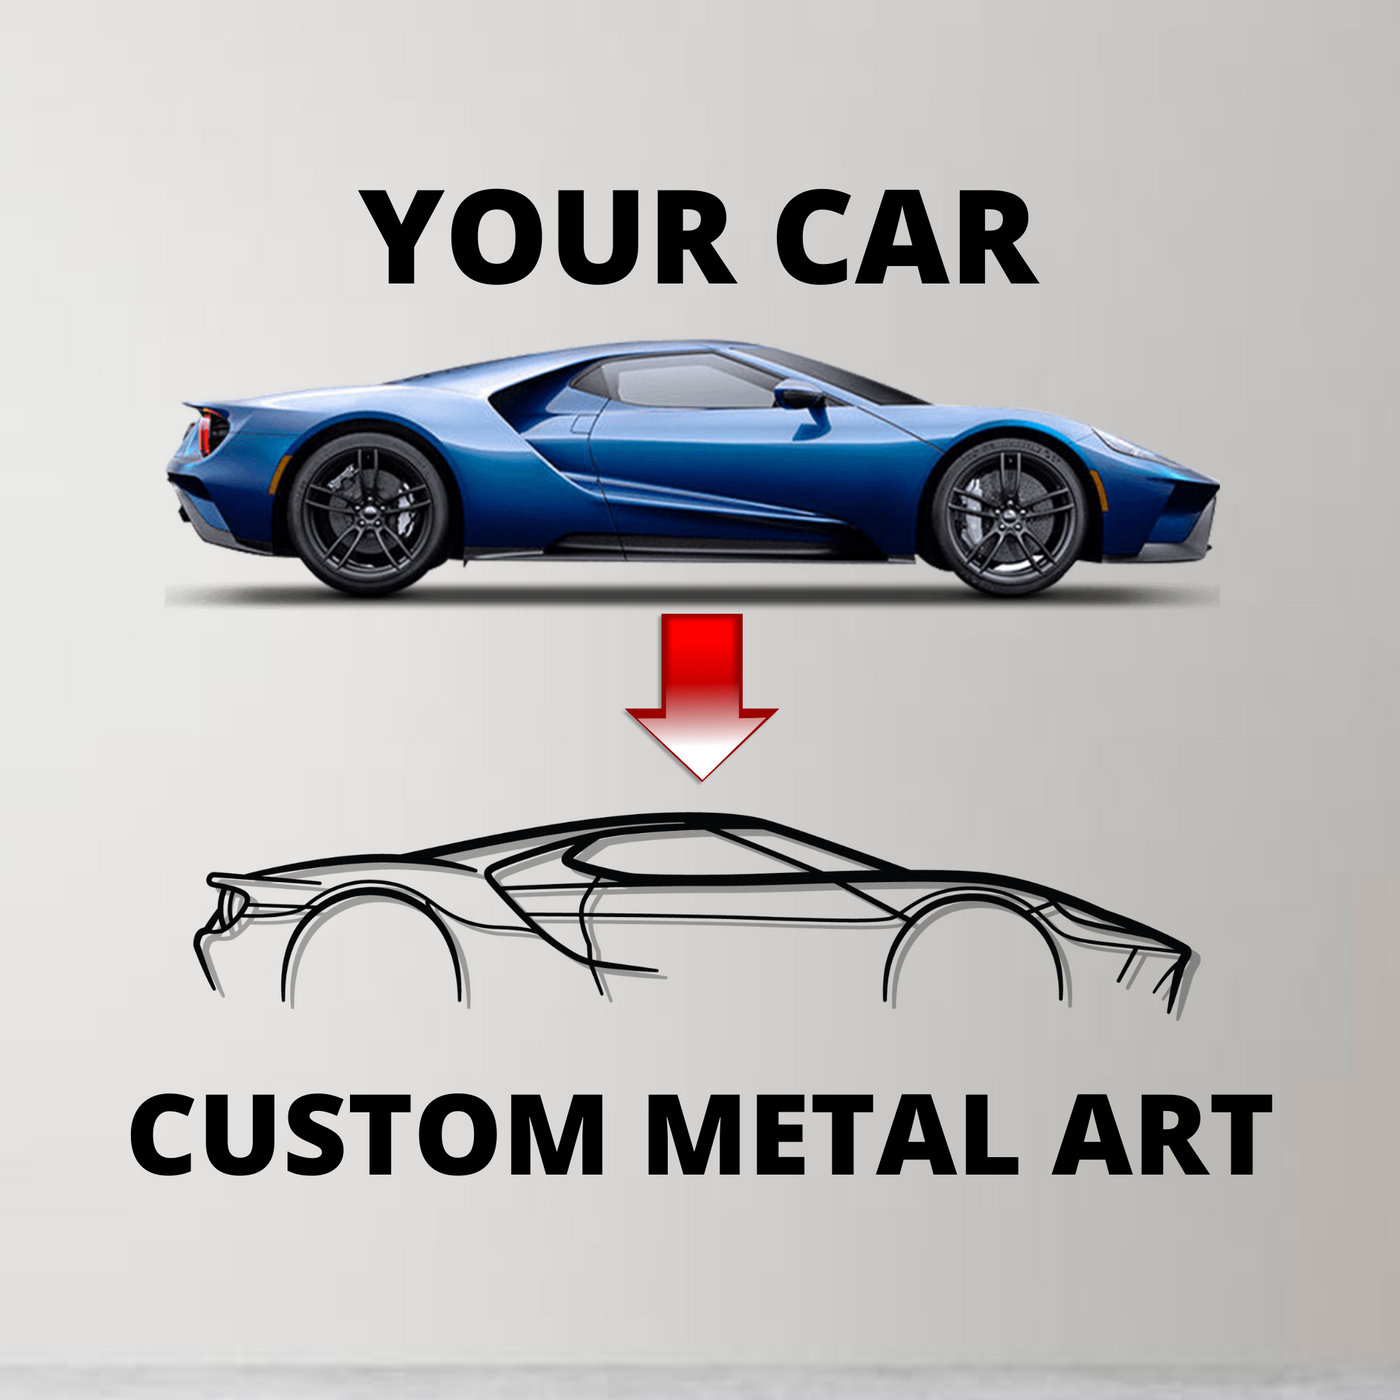 Corvette c4 Detailed Silhouette Metal Wall Art